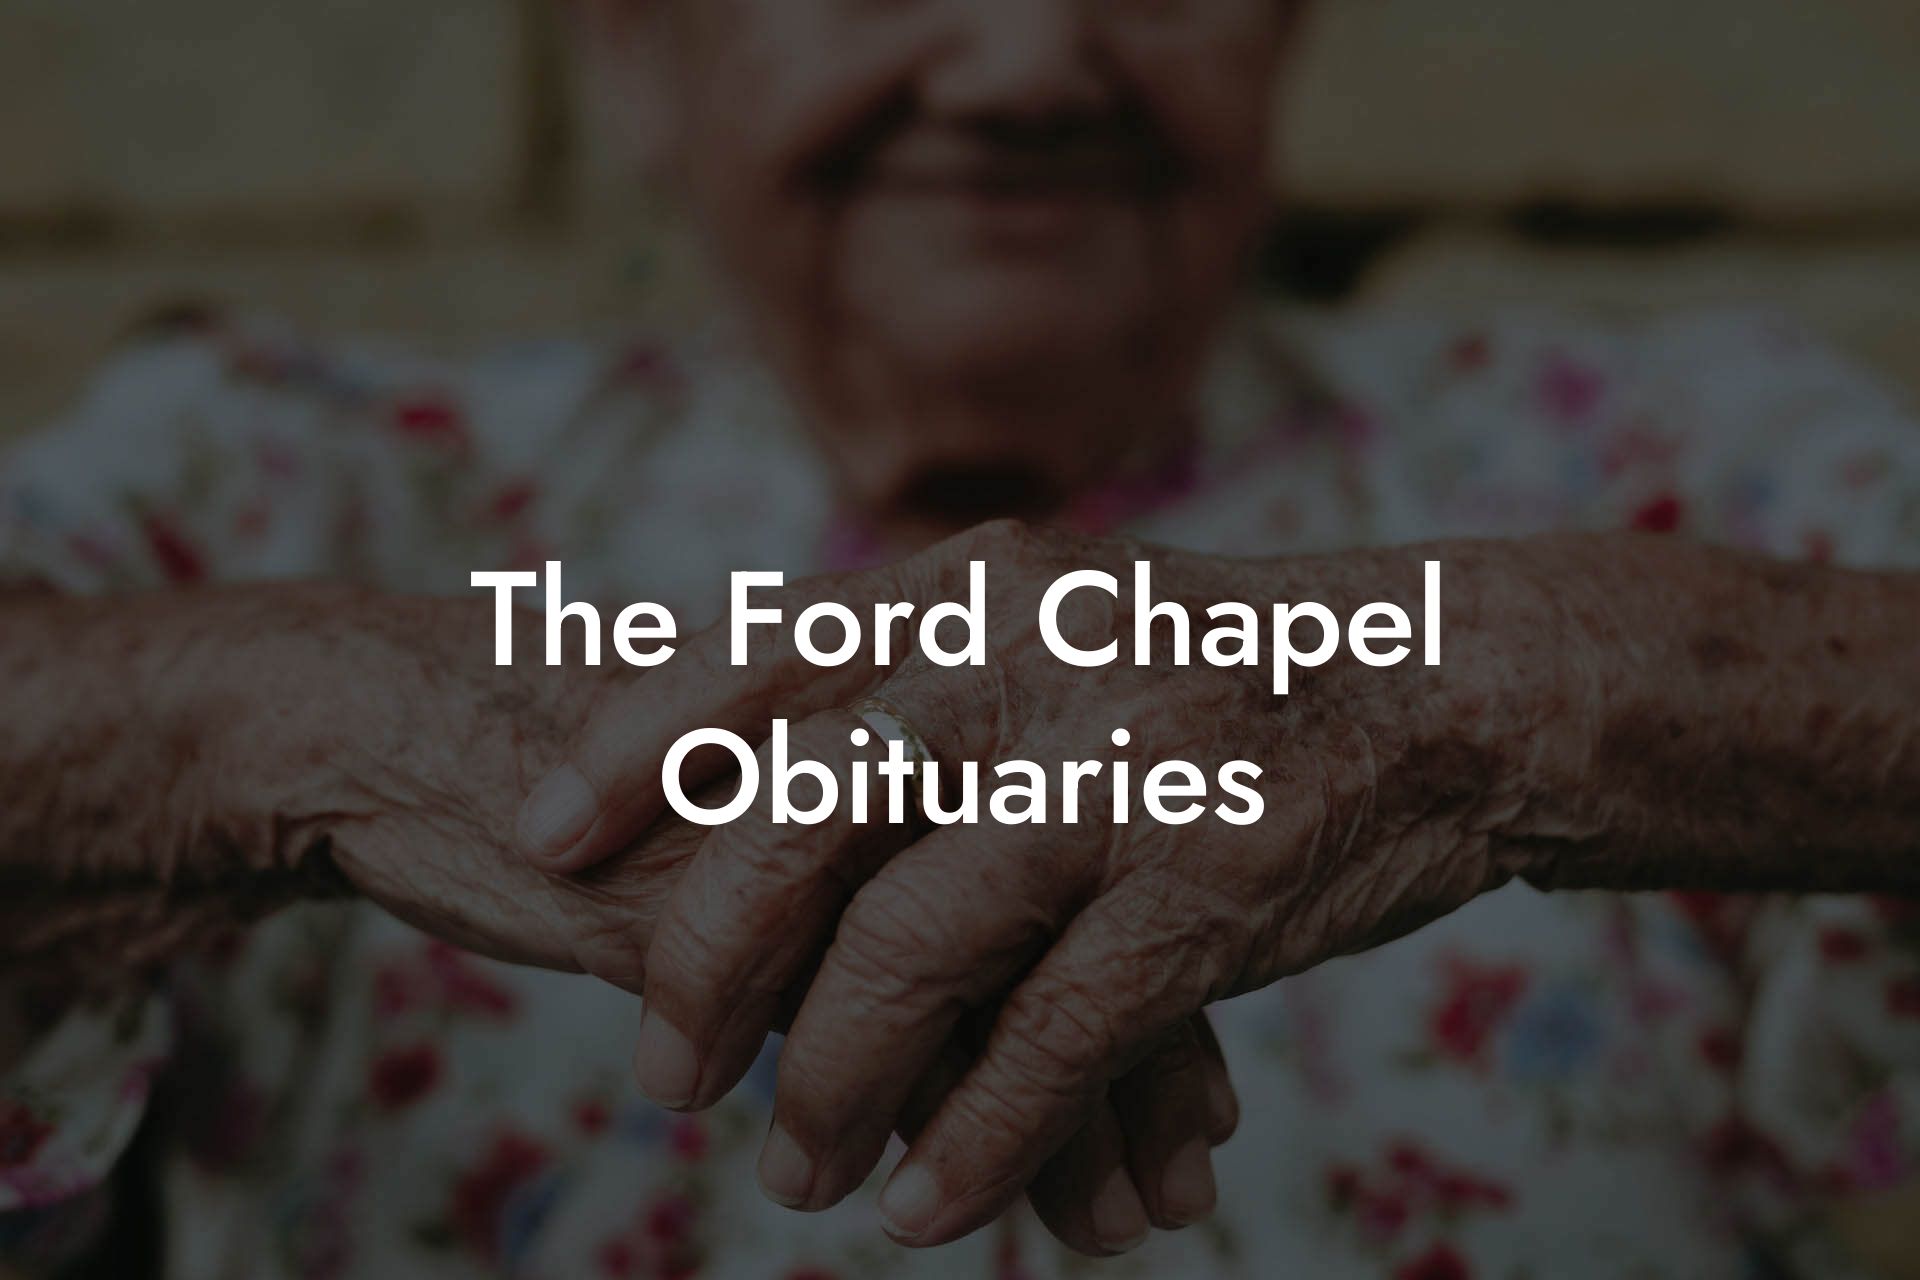 The Ford Chapel Obituaries